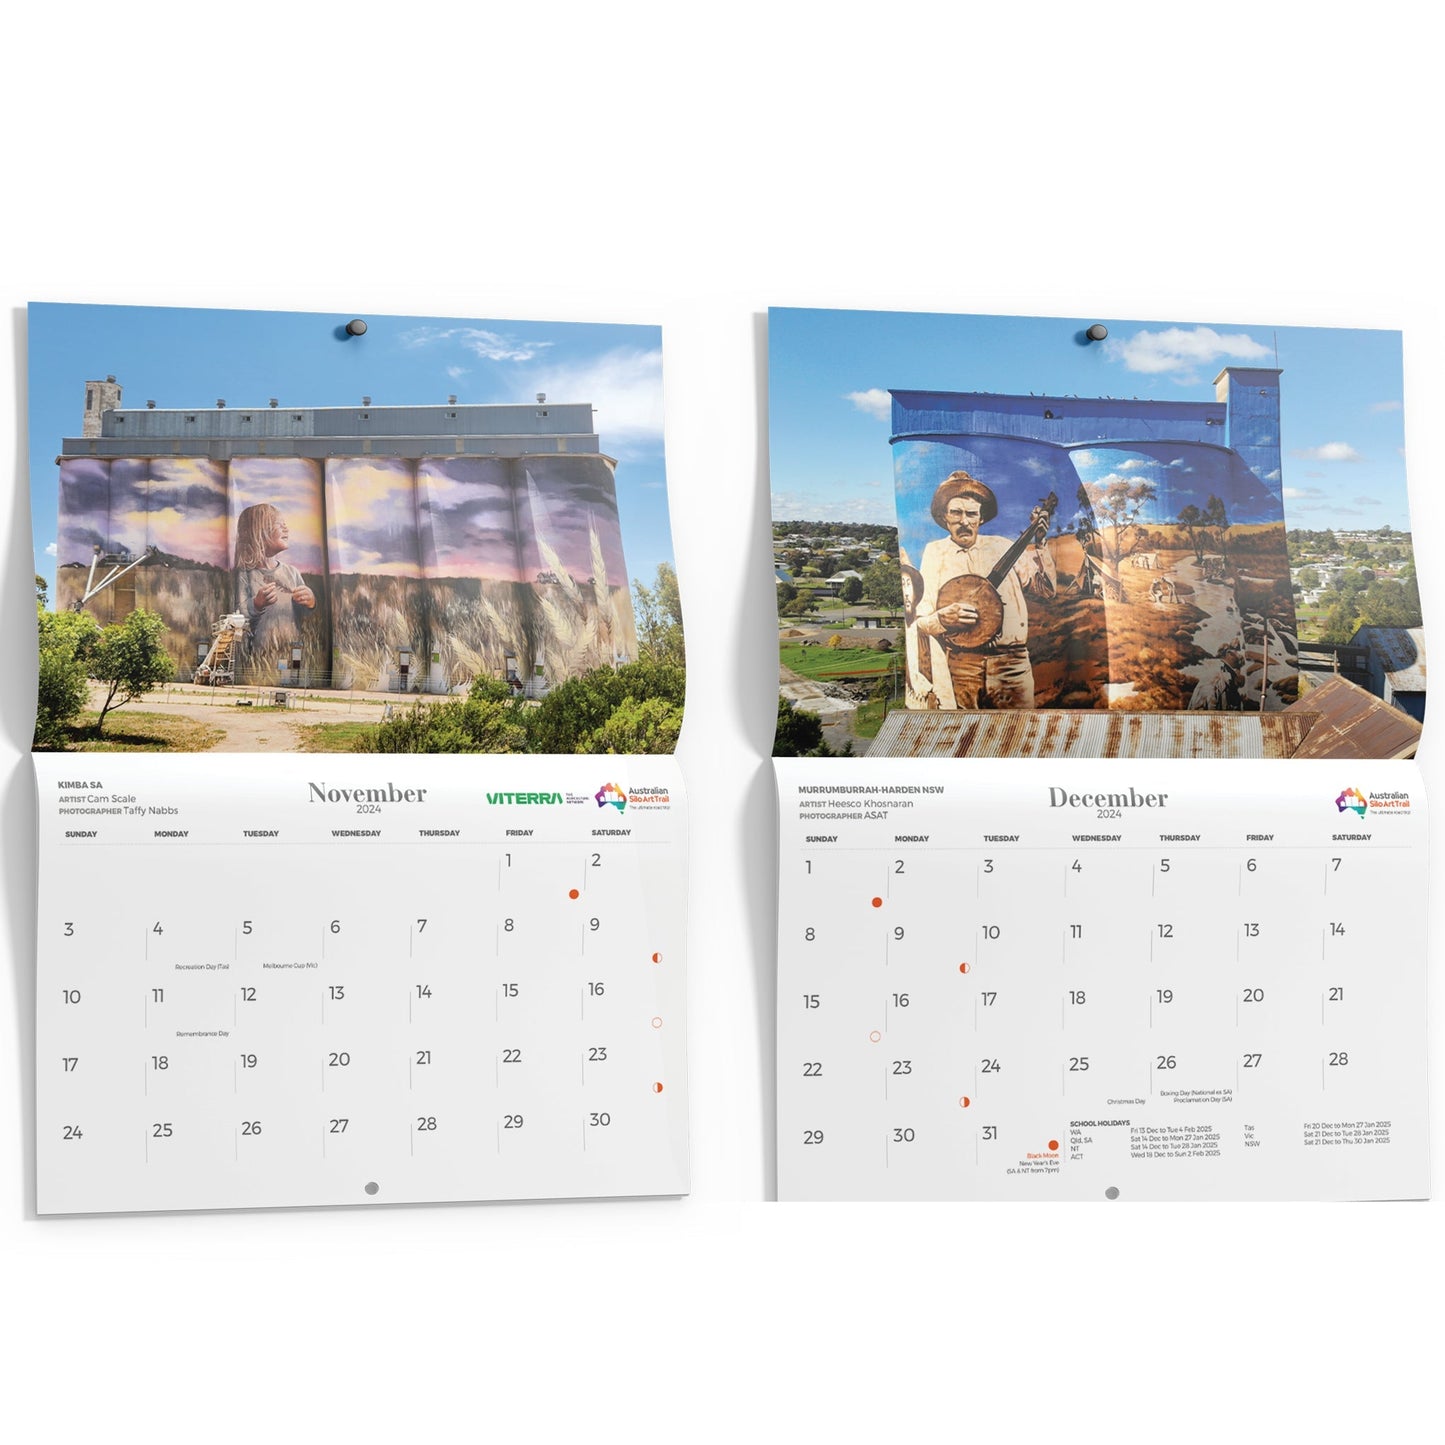 Silo Art Wall Calendar 2024